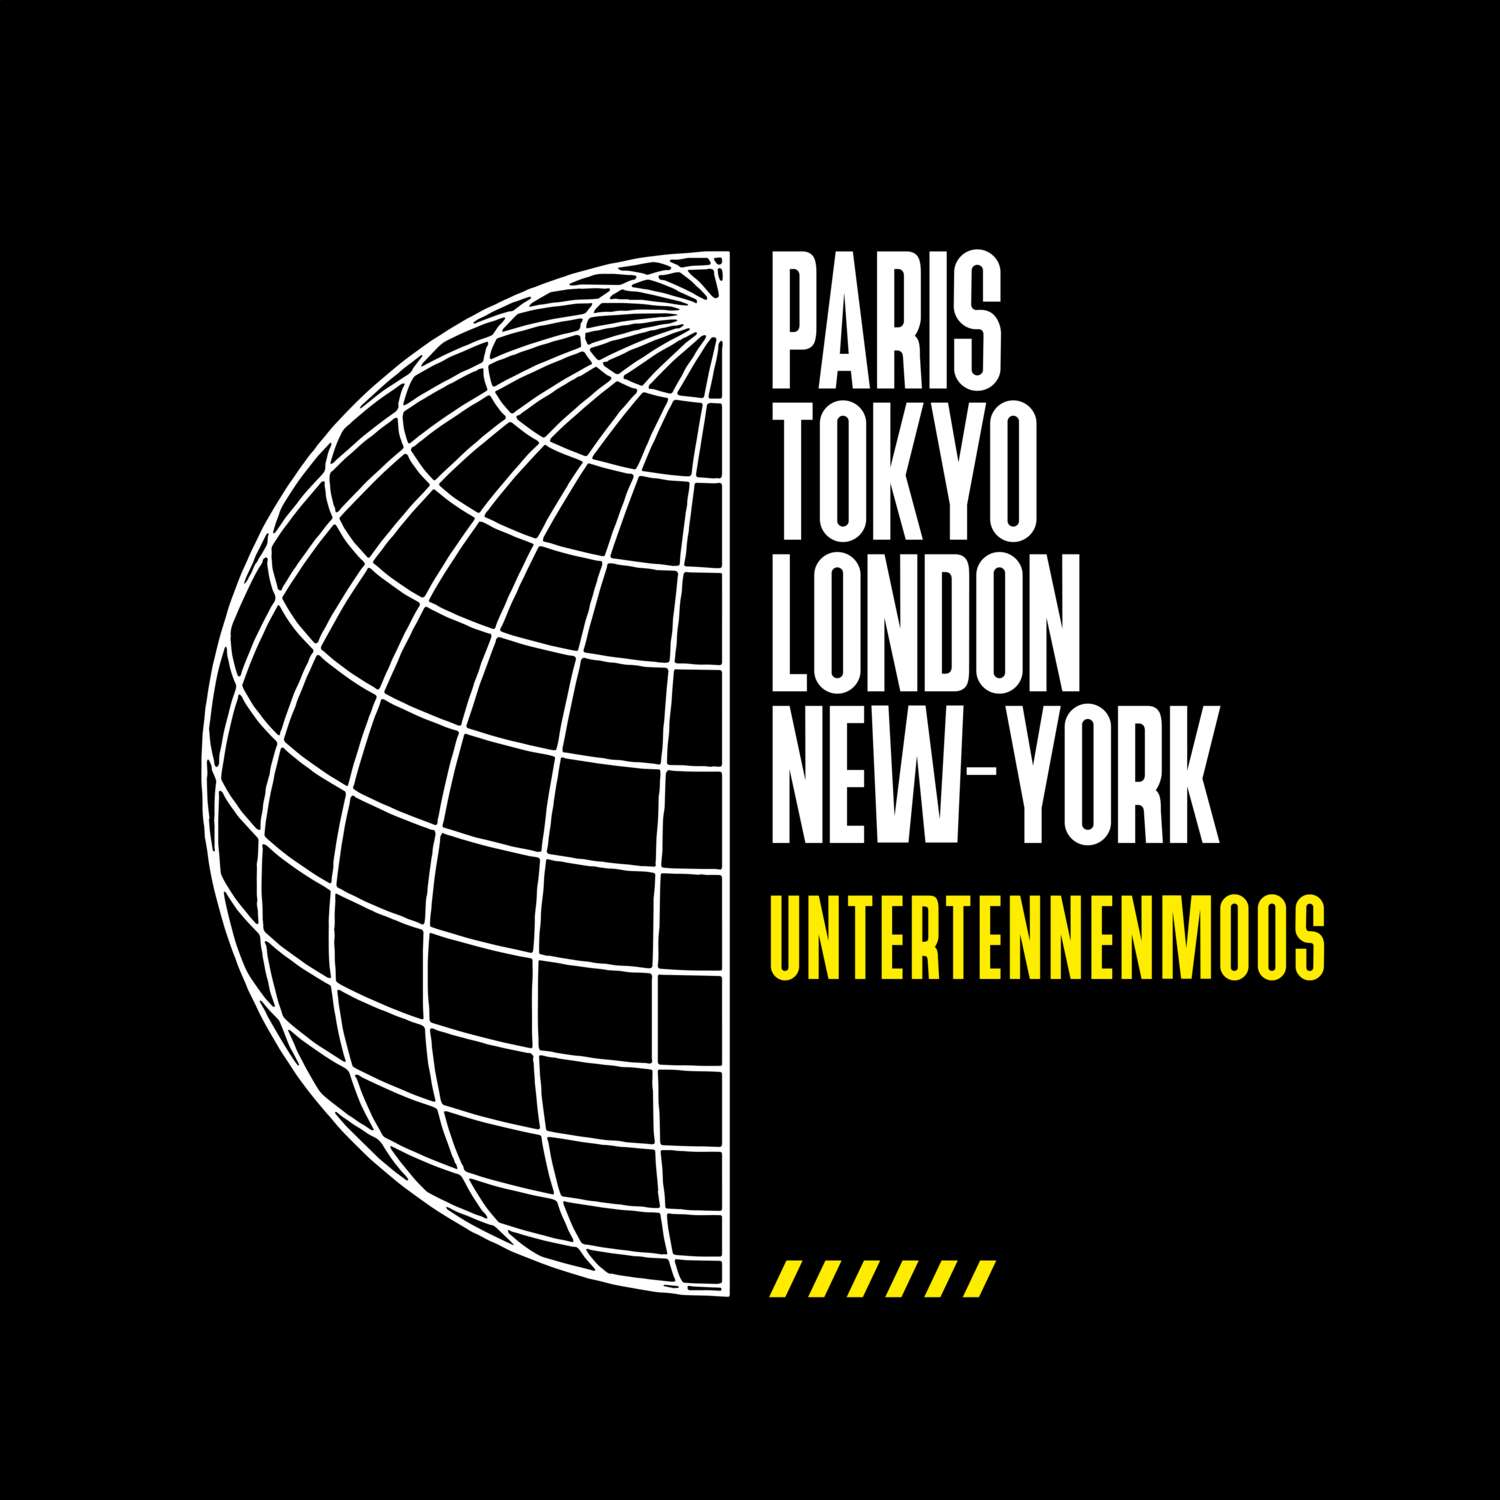 Untertennenmoos T-Shirt »Paris Tokyo London«